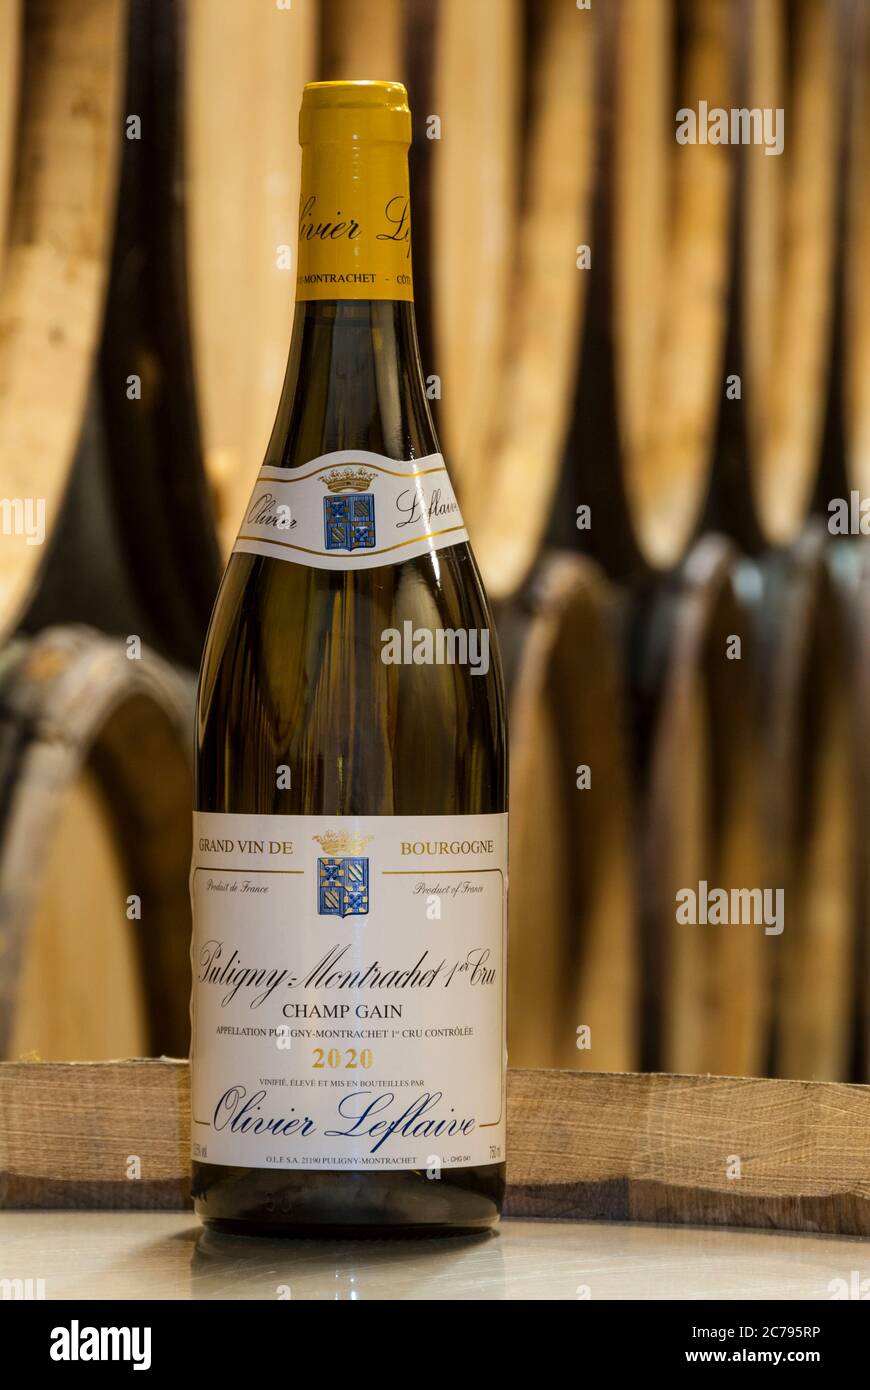 PULIGNY-MONTRACHET 2020 OLIVIER LEFLAIVE Premier cru ‘Champ Gain’ wine bottle on barrel in wine tasting barrel cellar Burgundy Cote d’Or France Stock Photo